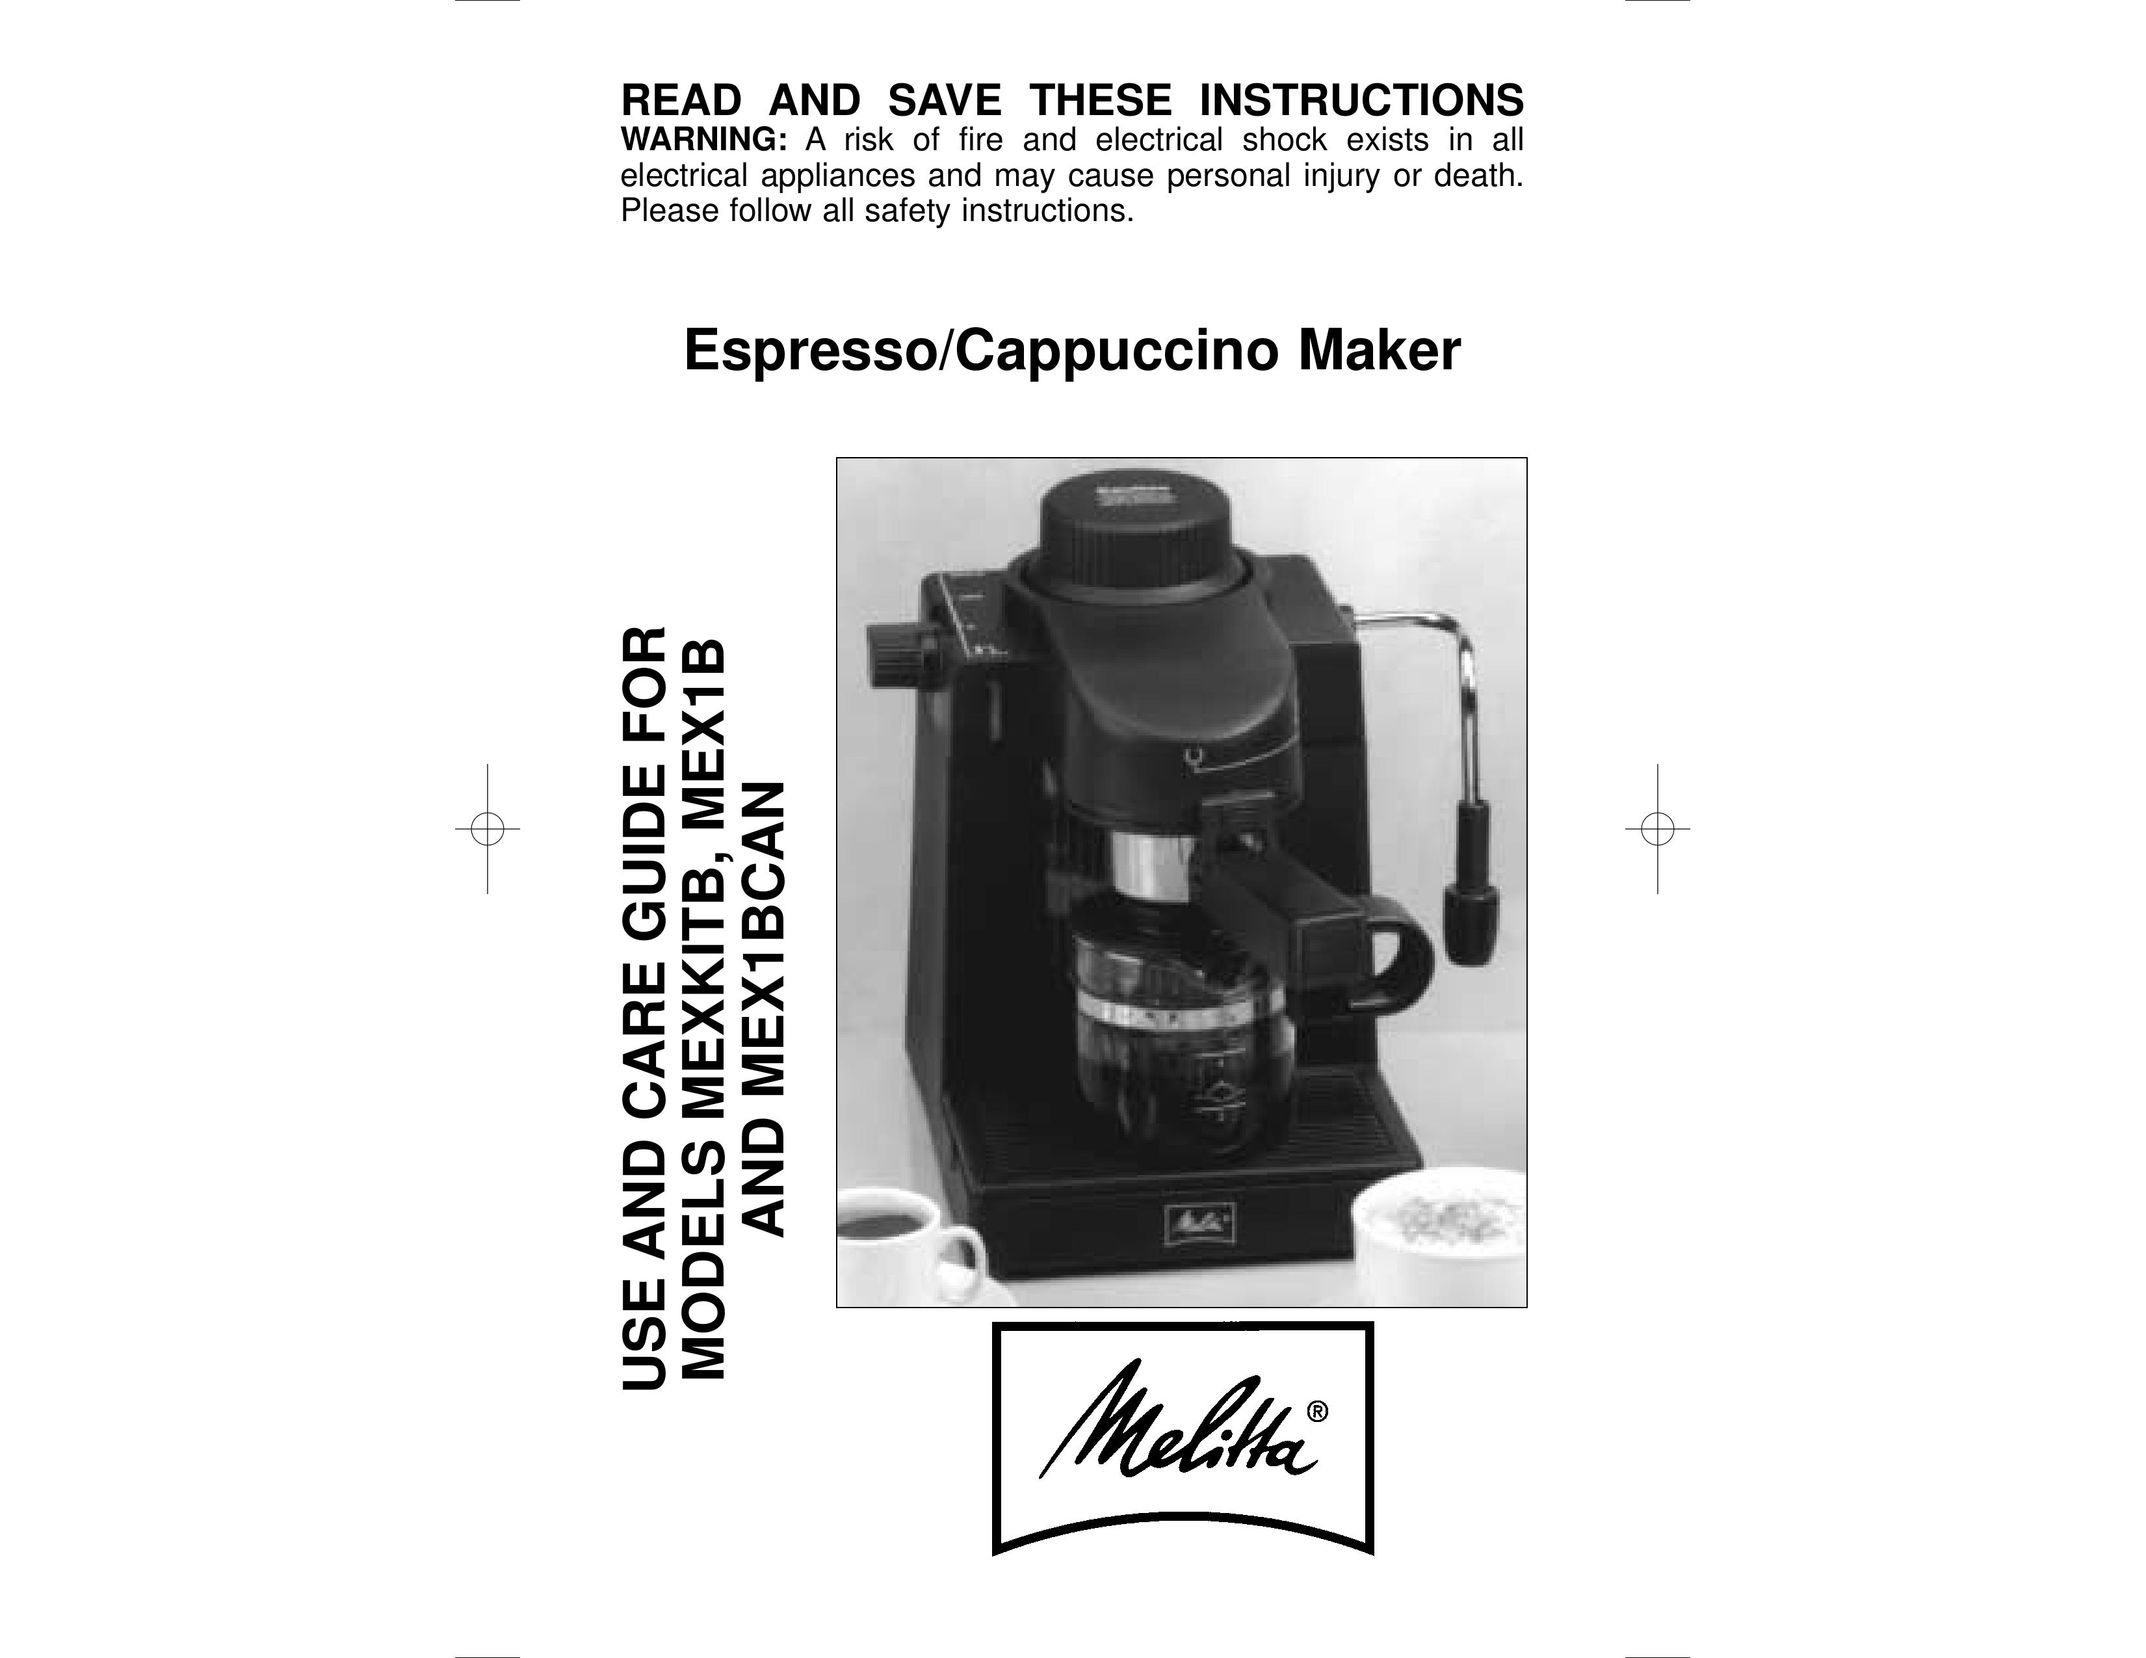 Melitta MEXKITB Espresso Maker User Manual